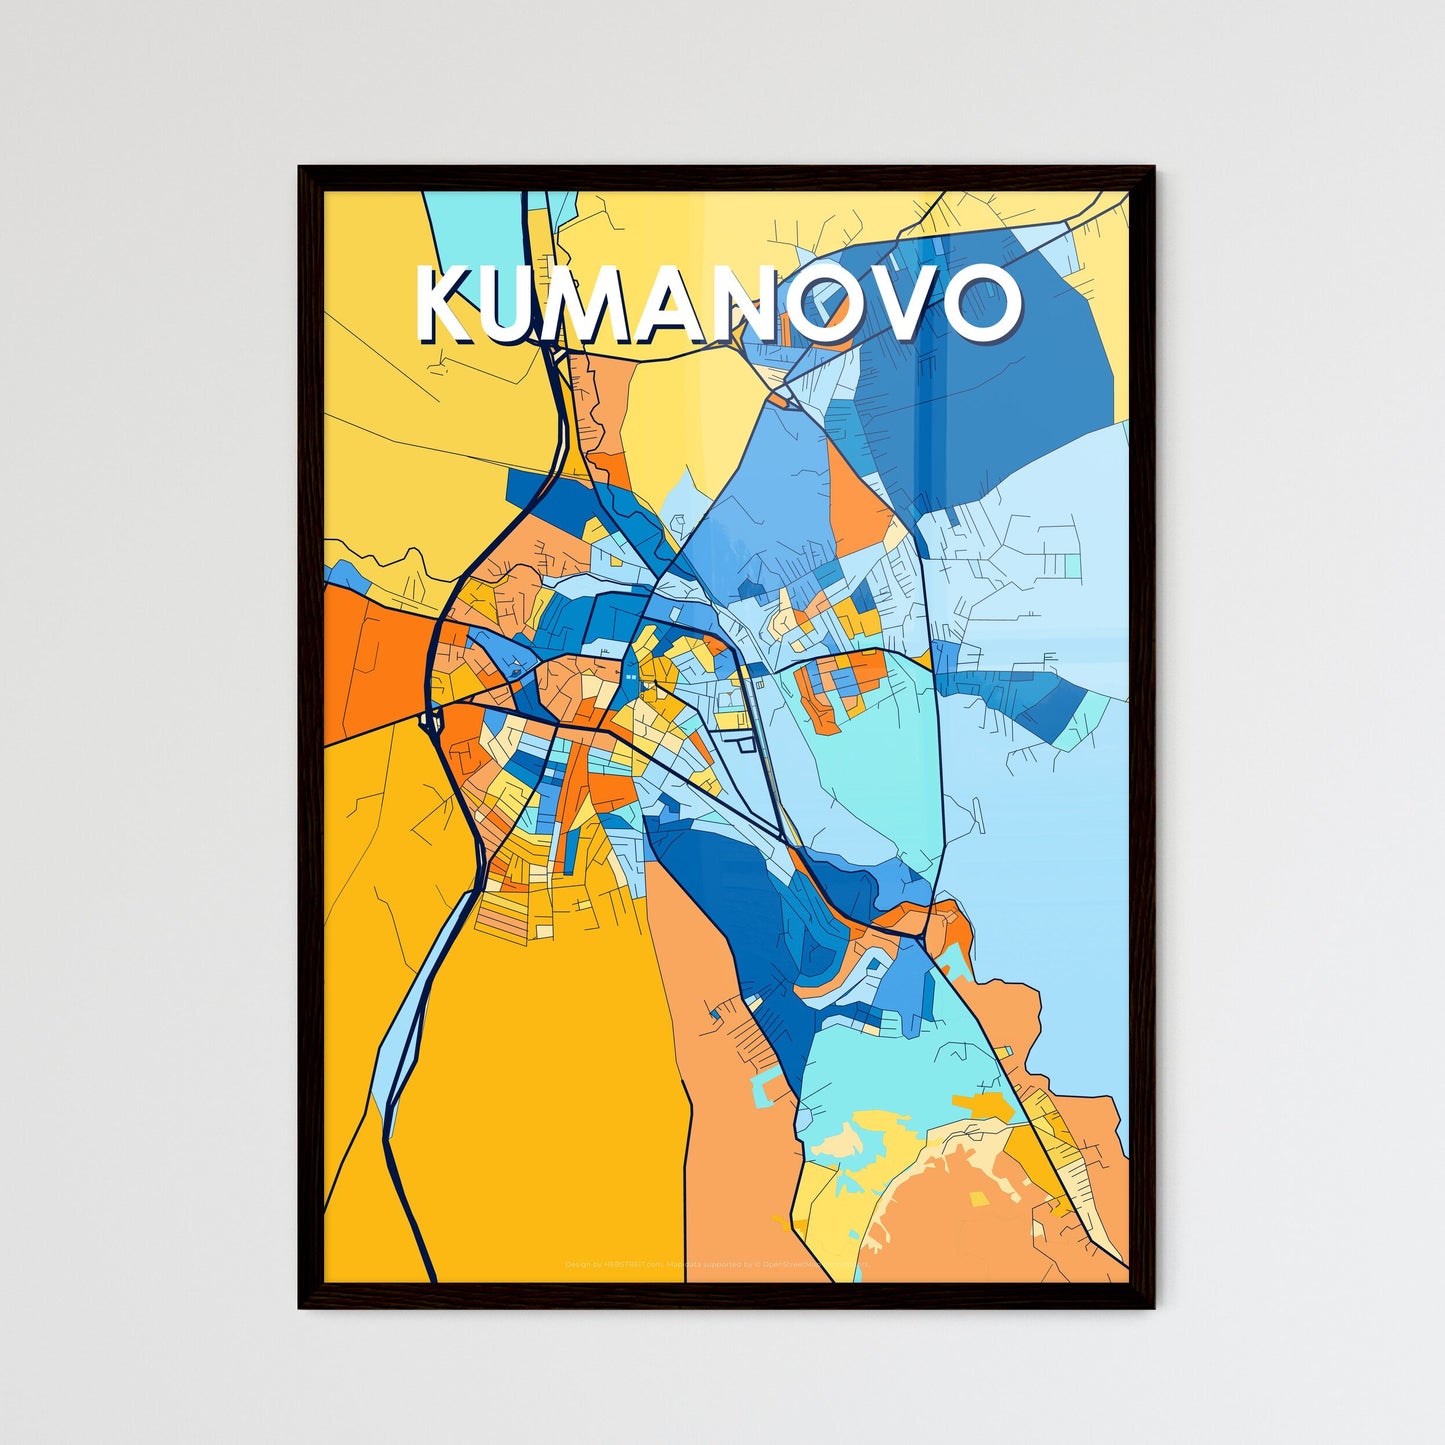 KUMANOVO NORTH MACEDONIA Vibrant Colorful Art Map Poster Blue Orange